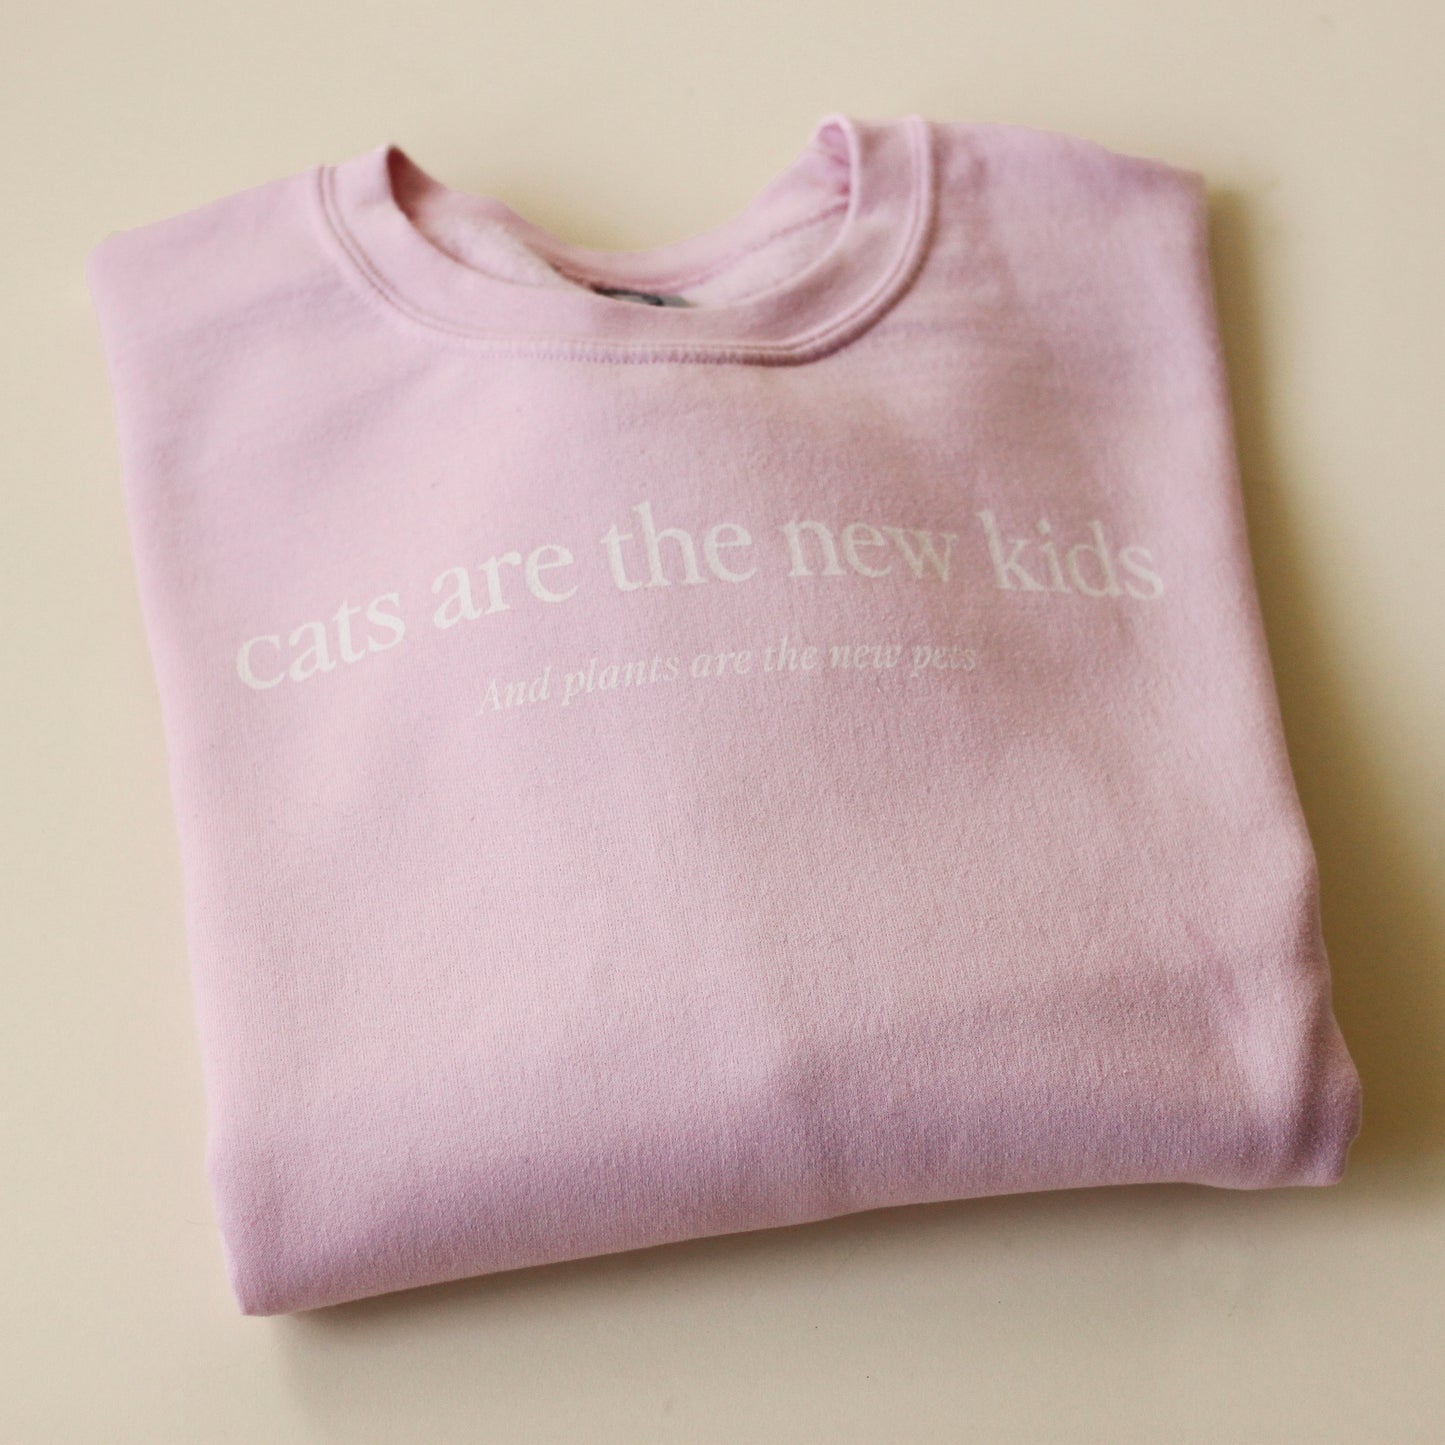 Bloire | Sweatshirt So Nineties  | For Cat Lovers